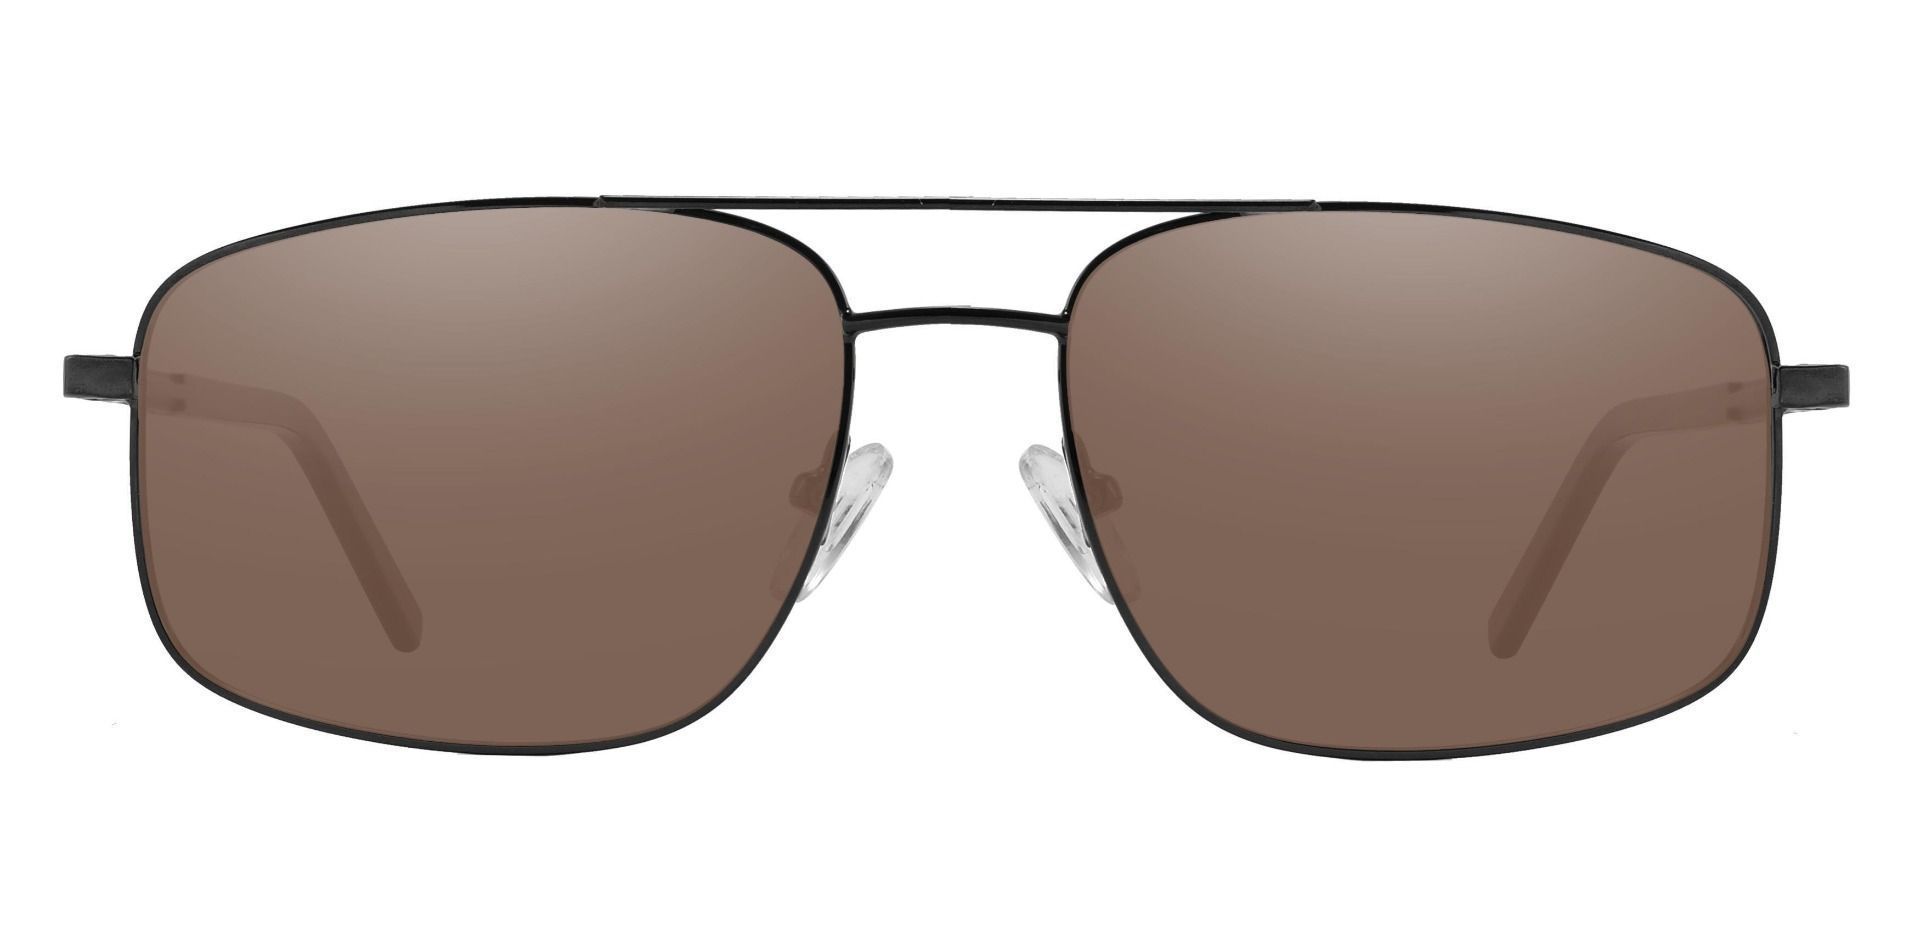 Davenport Aviator Prescription Sunglasses - Black Frame With Brown Lenses